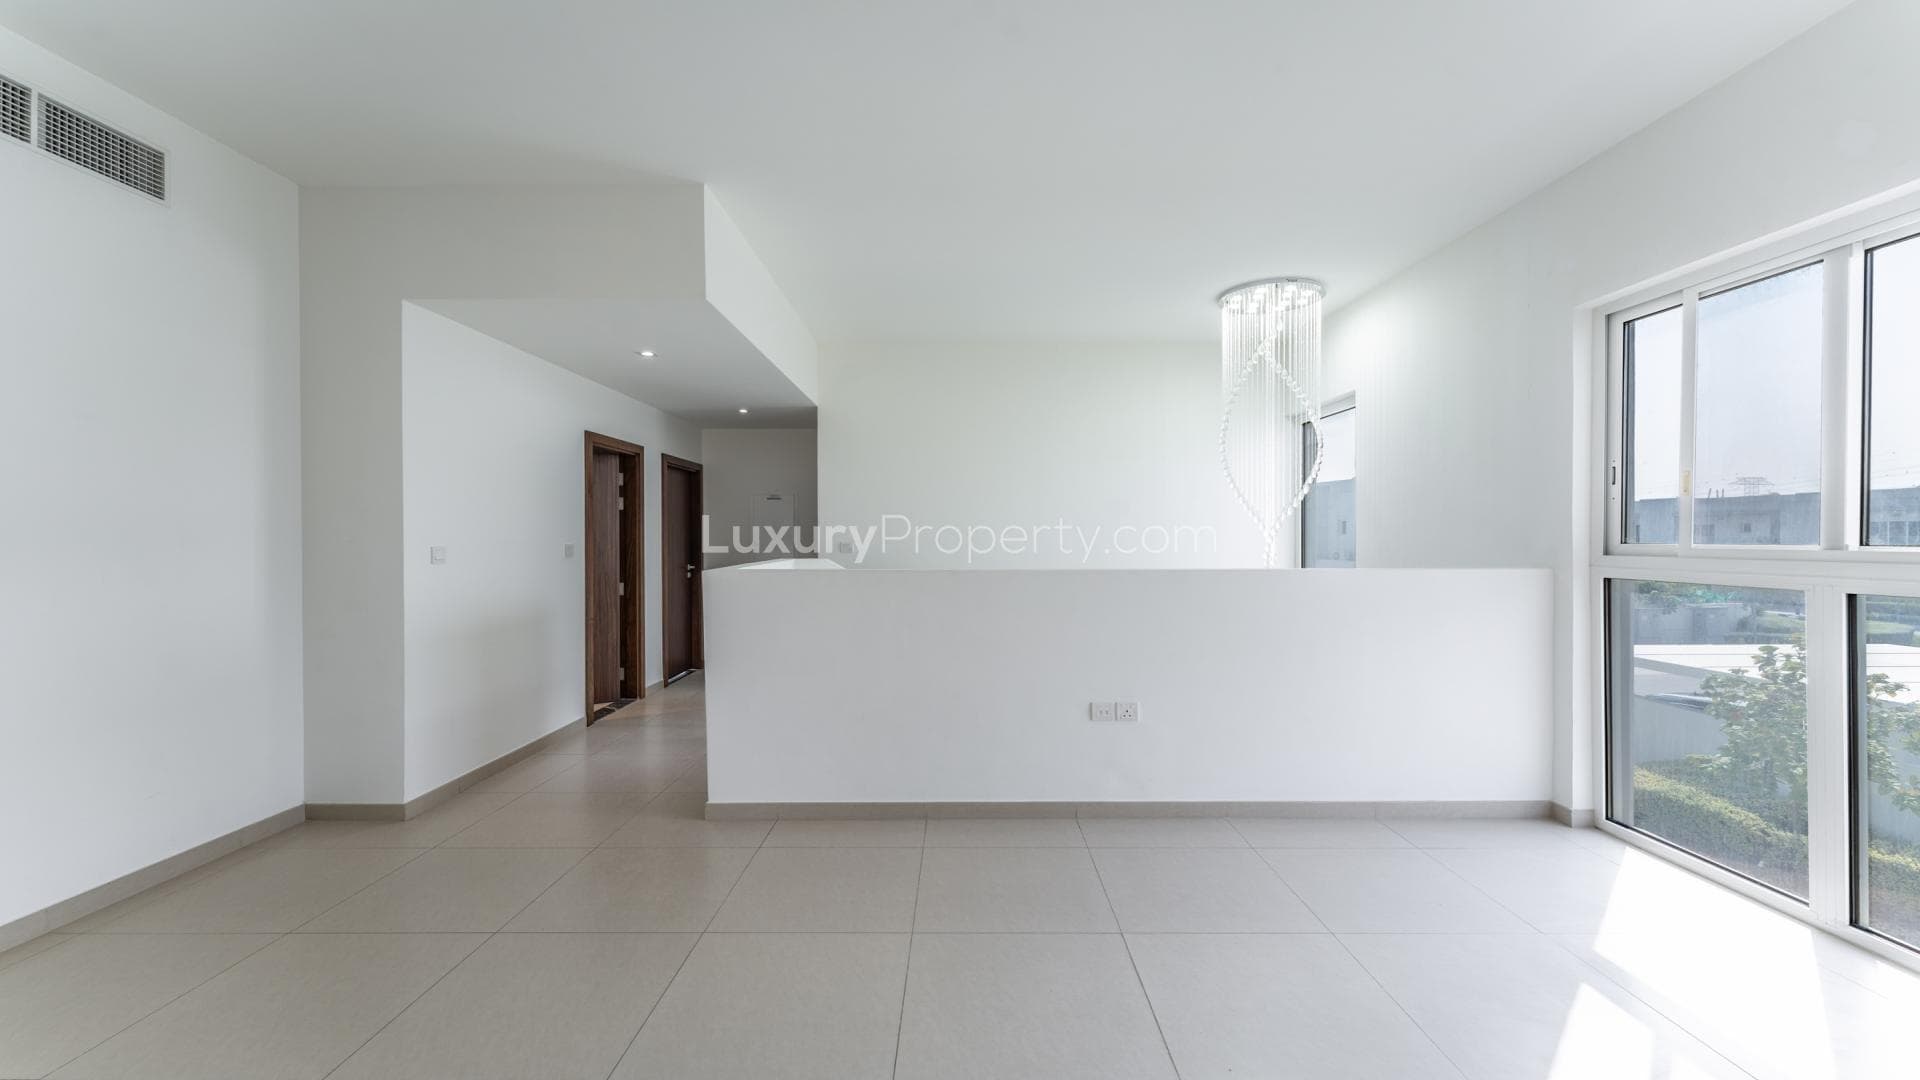 5 Bedroom Villa For Sale Al Kazim Tower 1 Lp37350 2c3c89148b180800.jpg